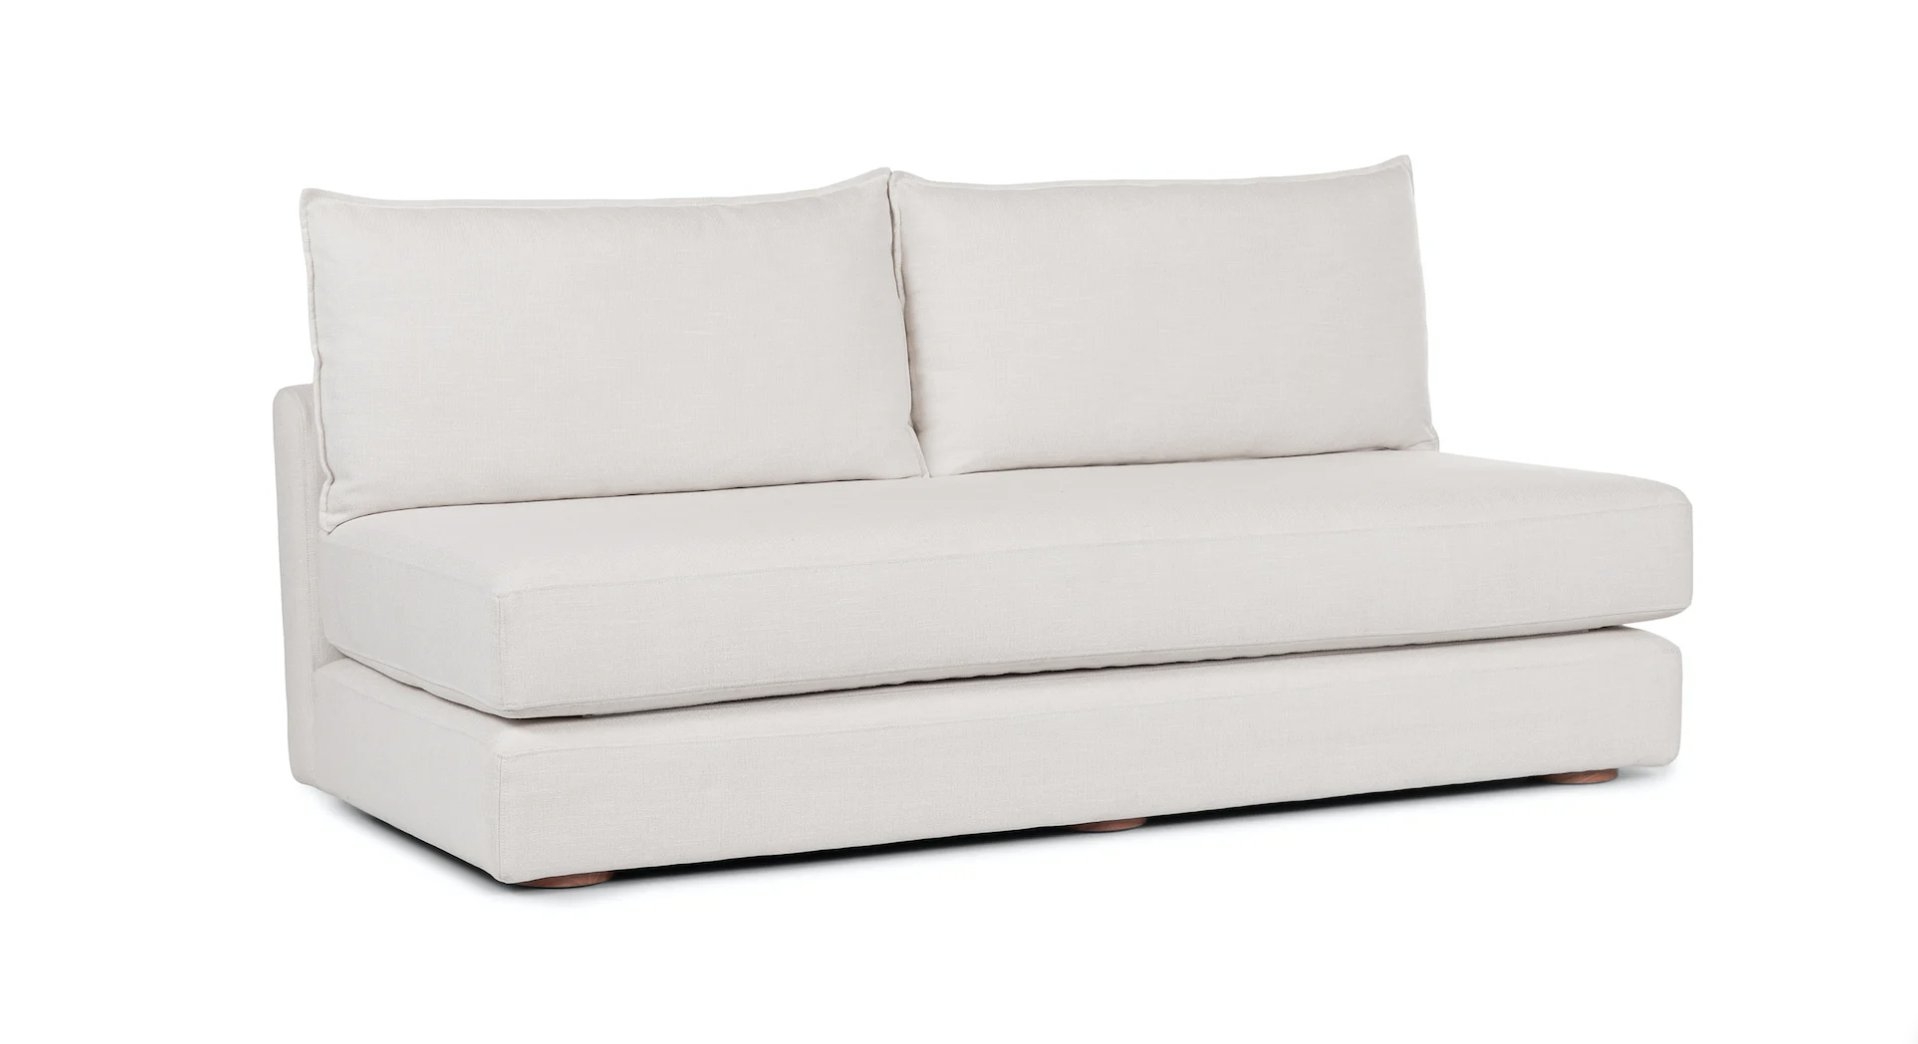 Braam Vintage White Sofa Bed - Image 1